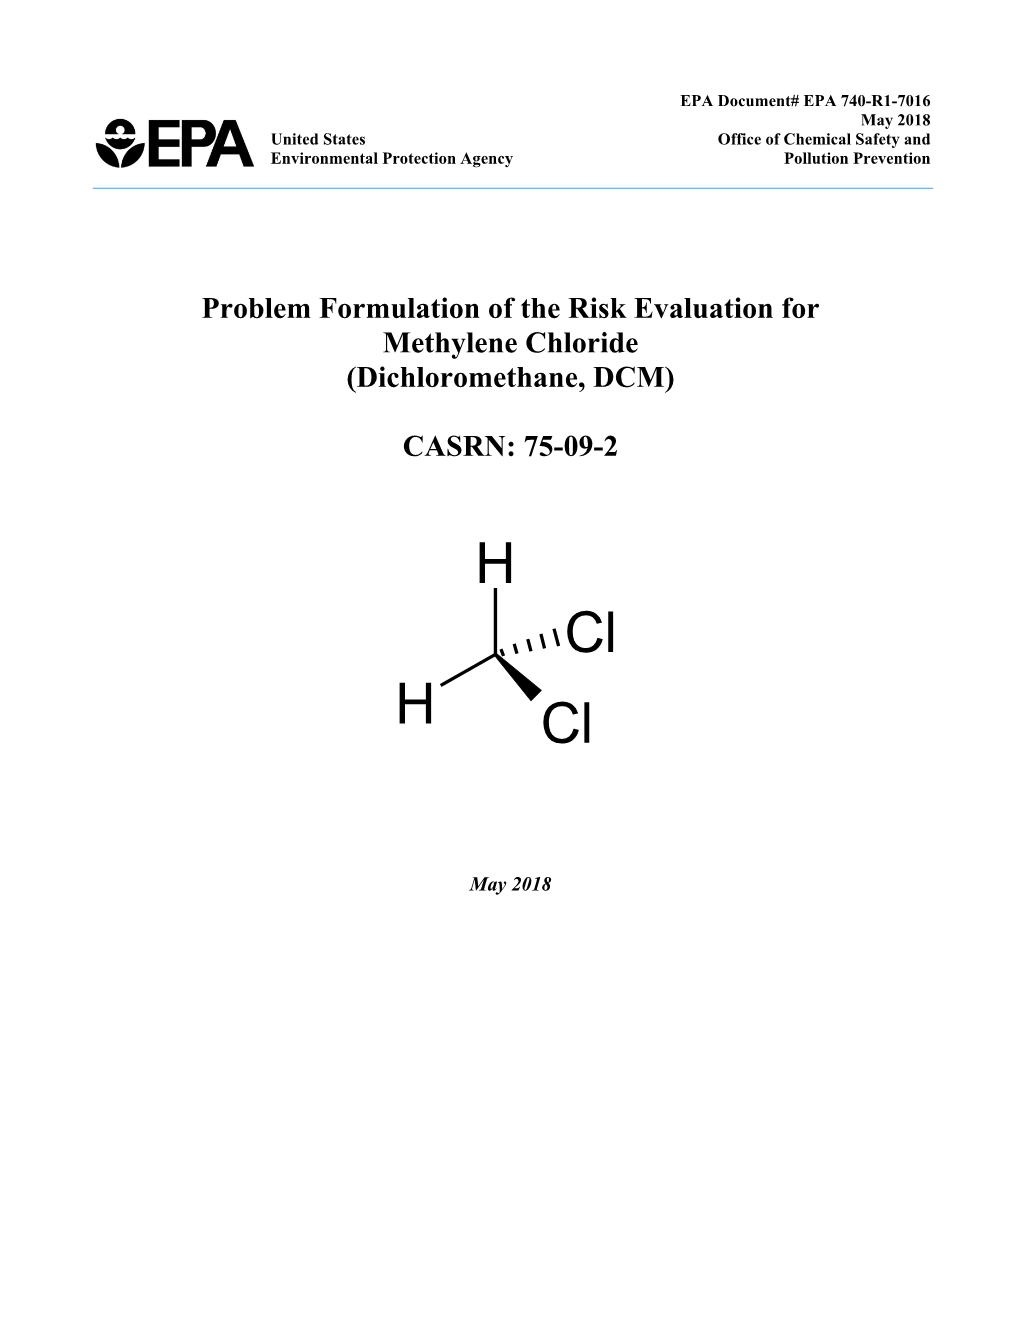 Problem Formulation of the Risk Evaluation for Methylene Chloride (Dichloromethane, DCM)